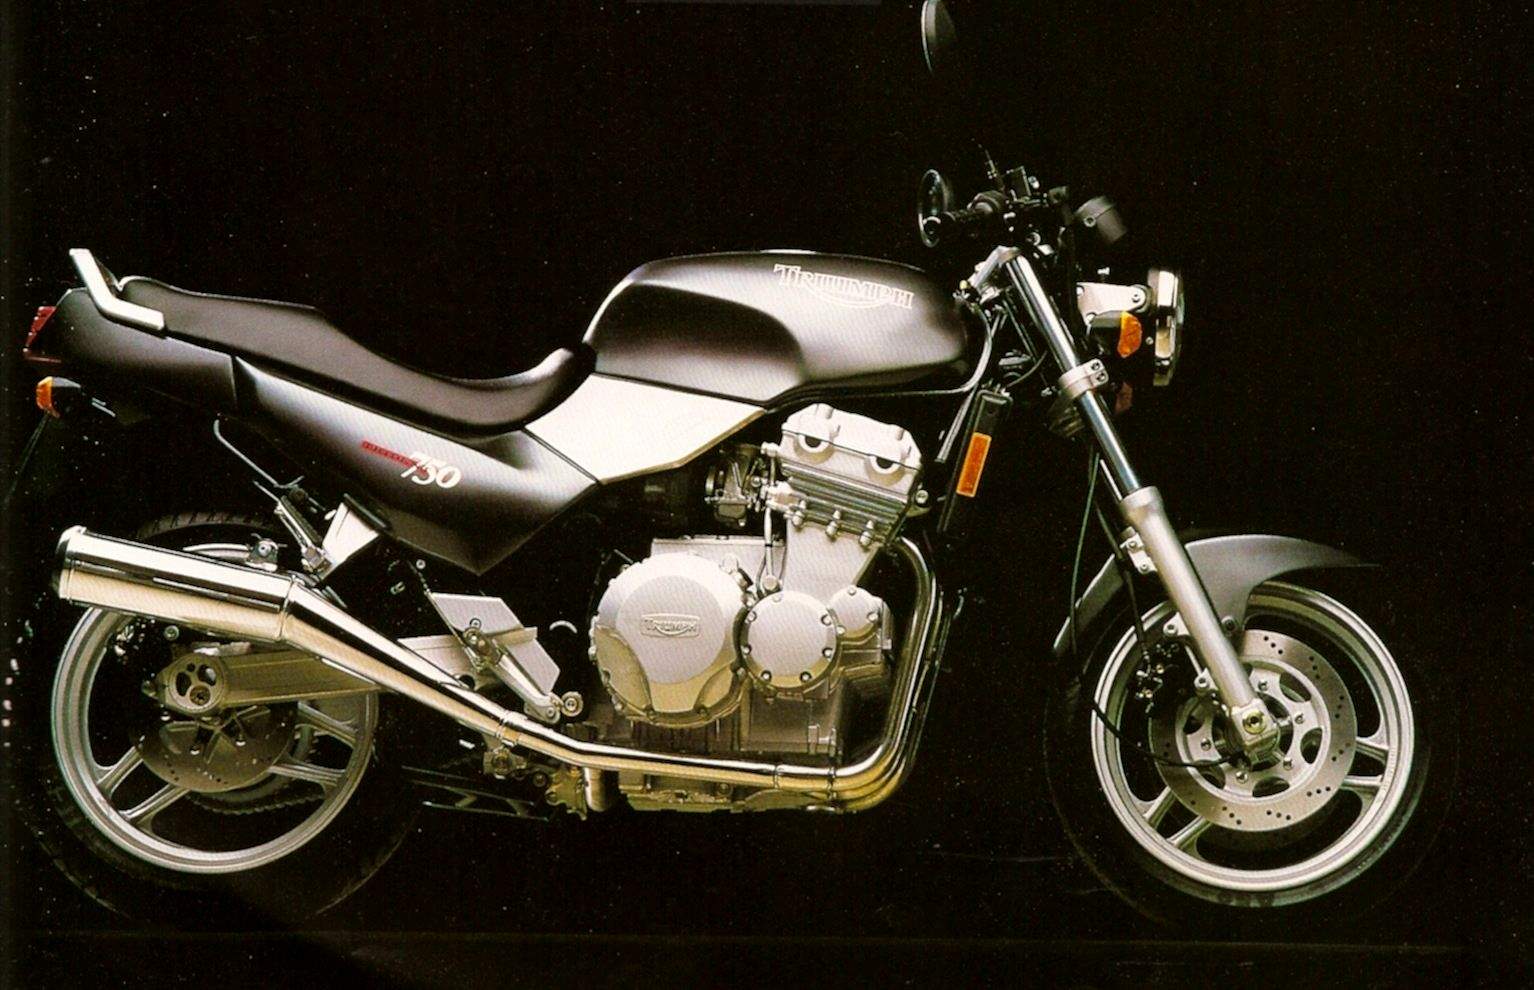 Мотоцикл Triumph Trident 750  199